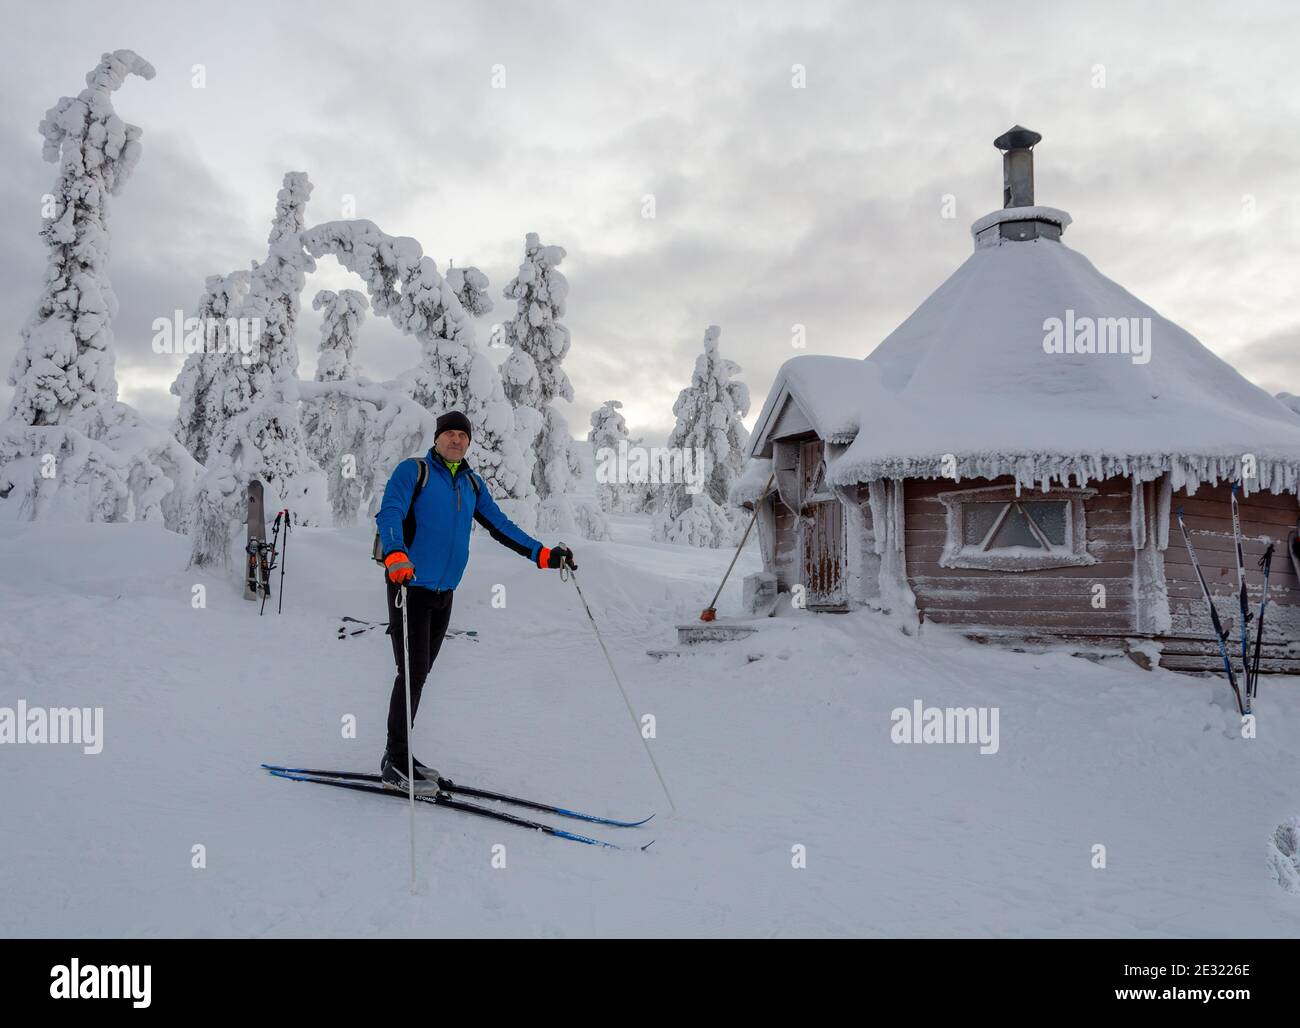 Skier in snowy landscape in Finland's Lapland Stock Photo